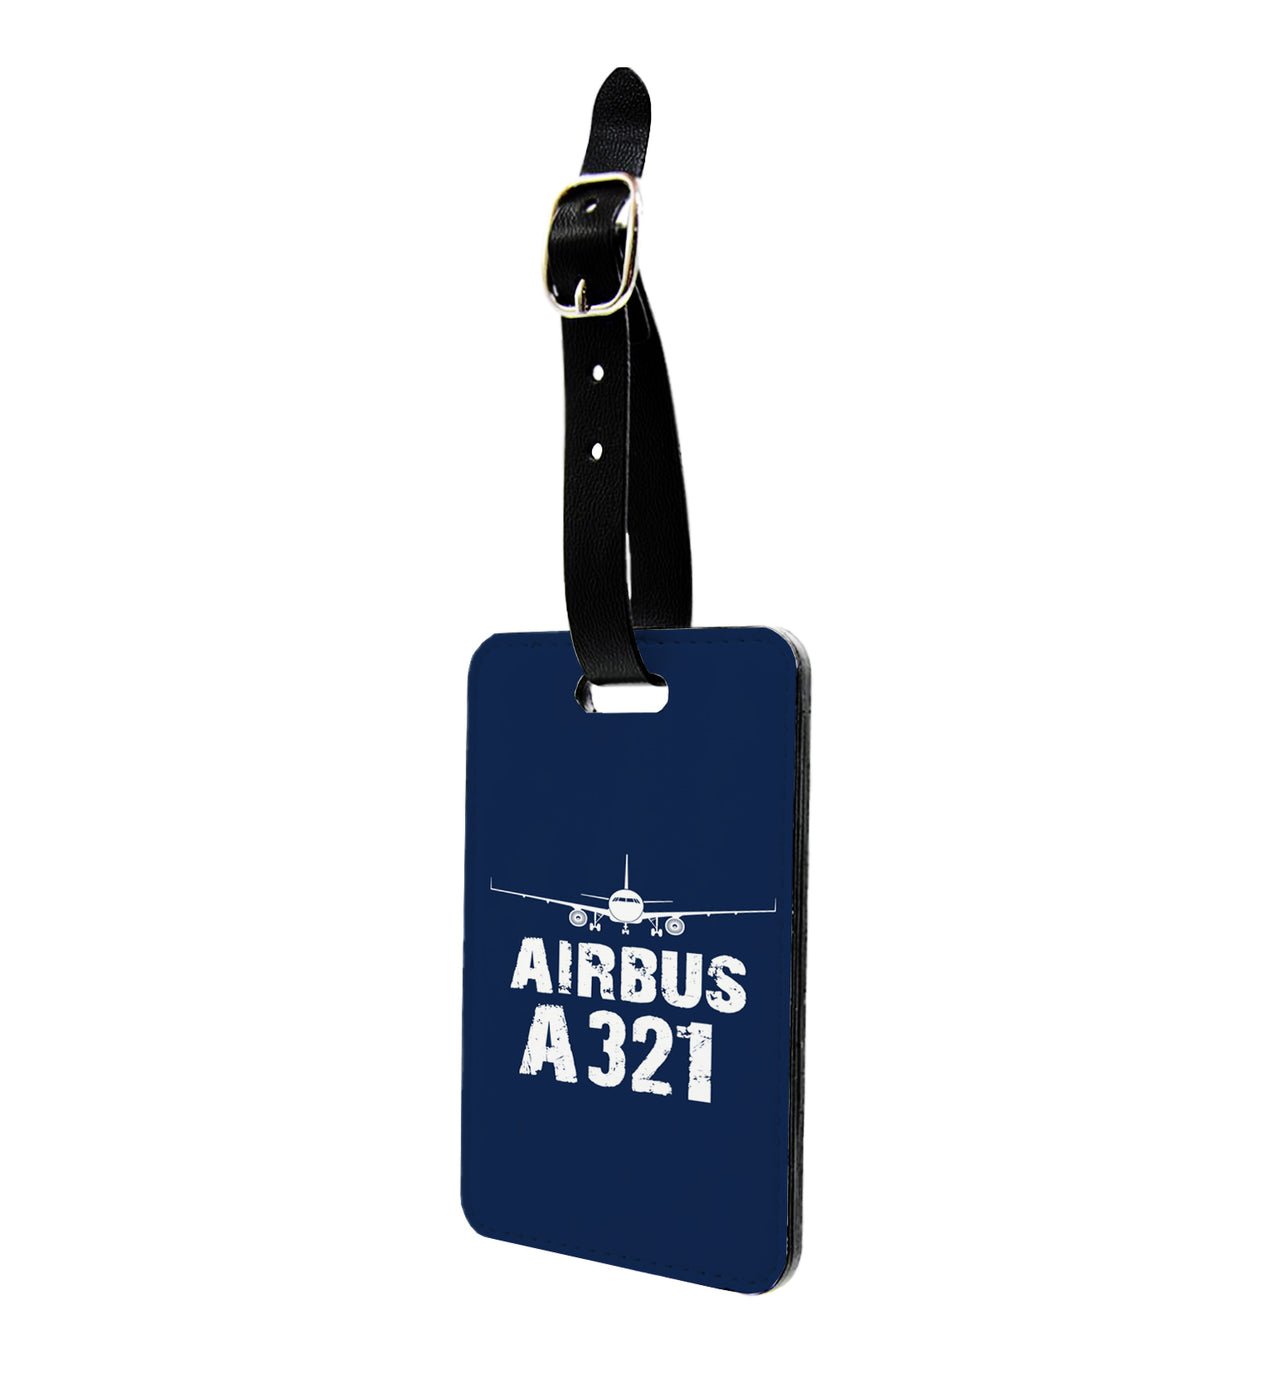 Airbus A321 & Plane Designed Luggage Tag